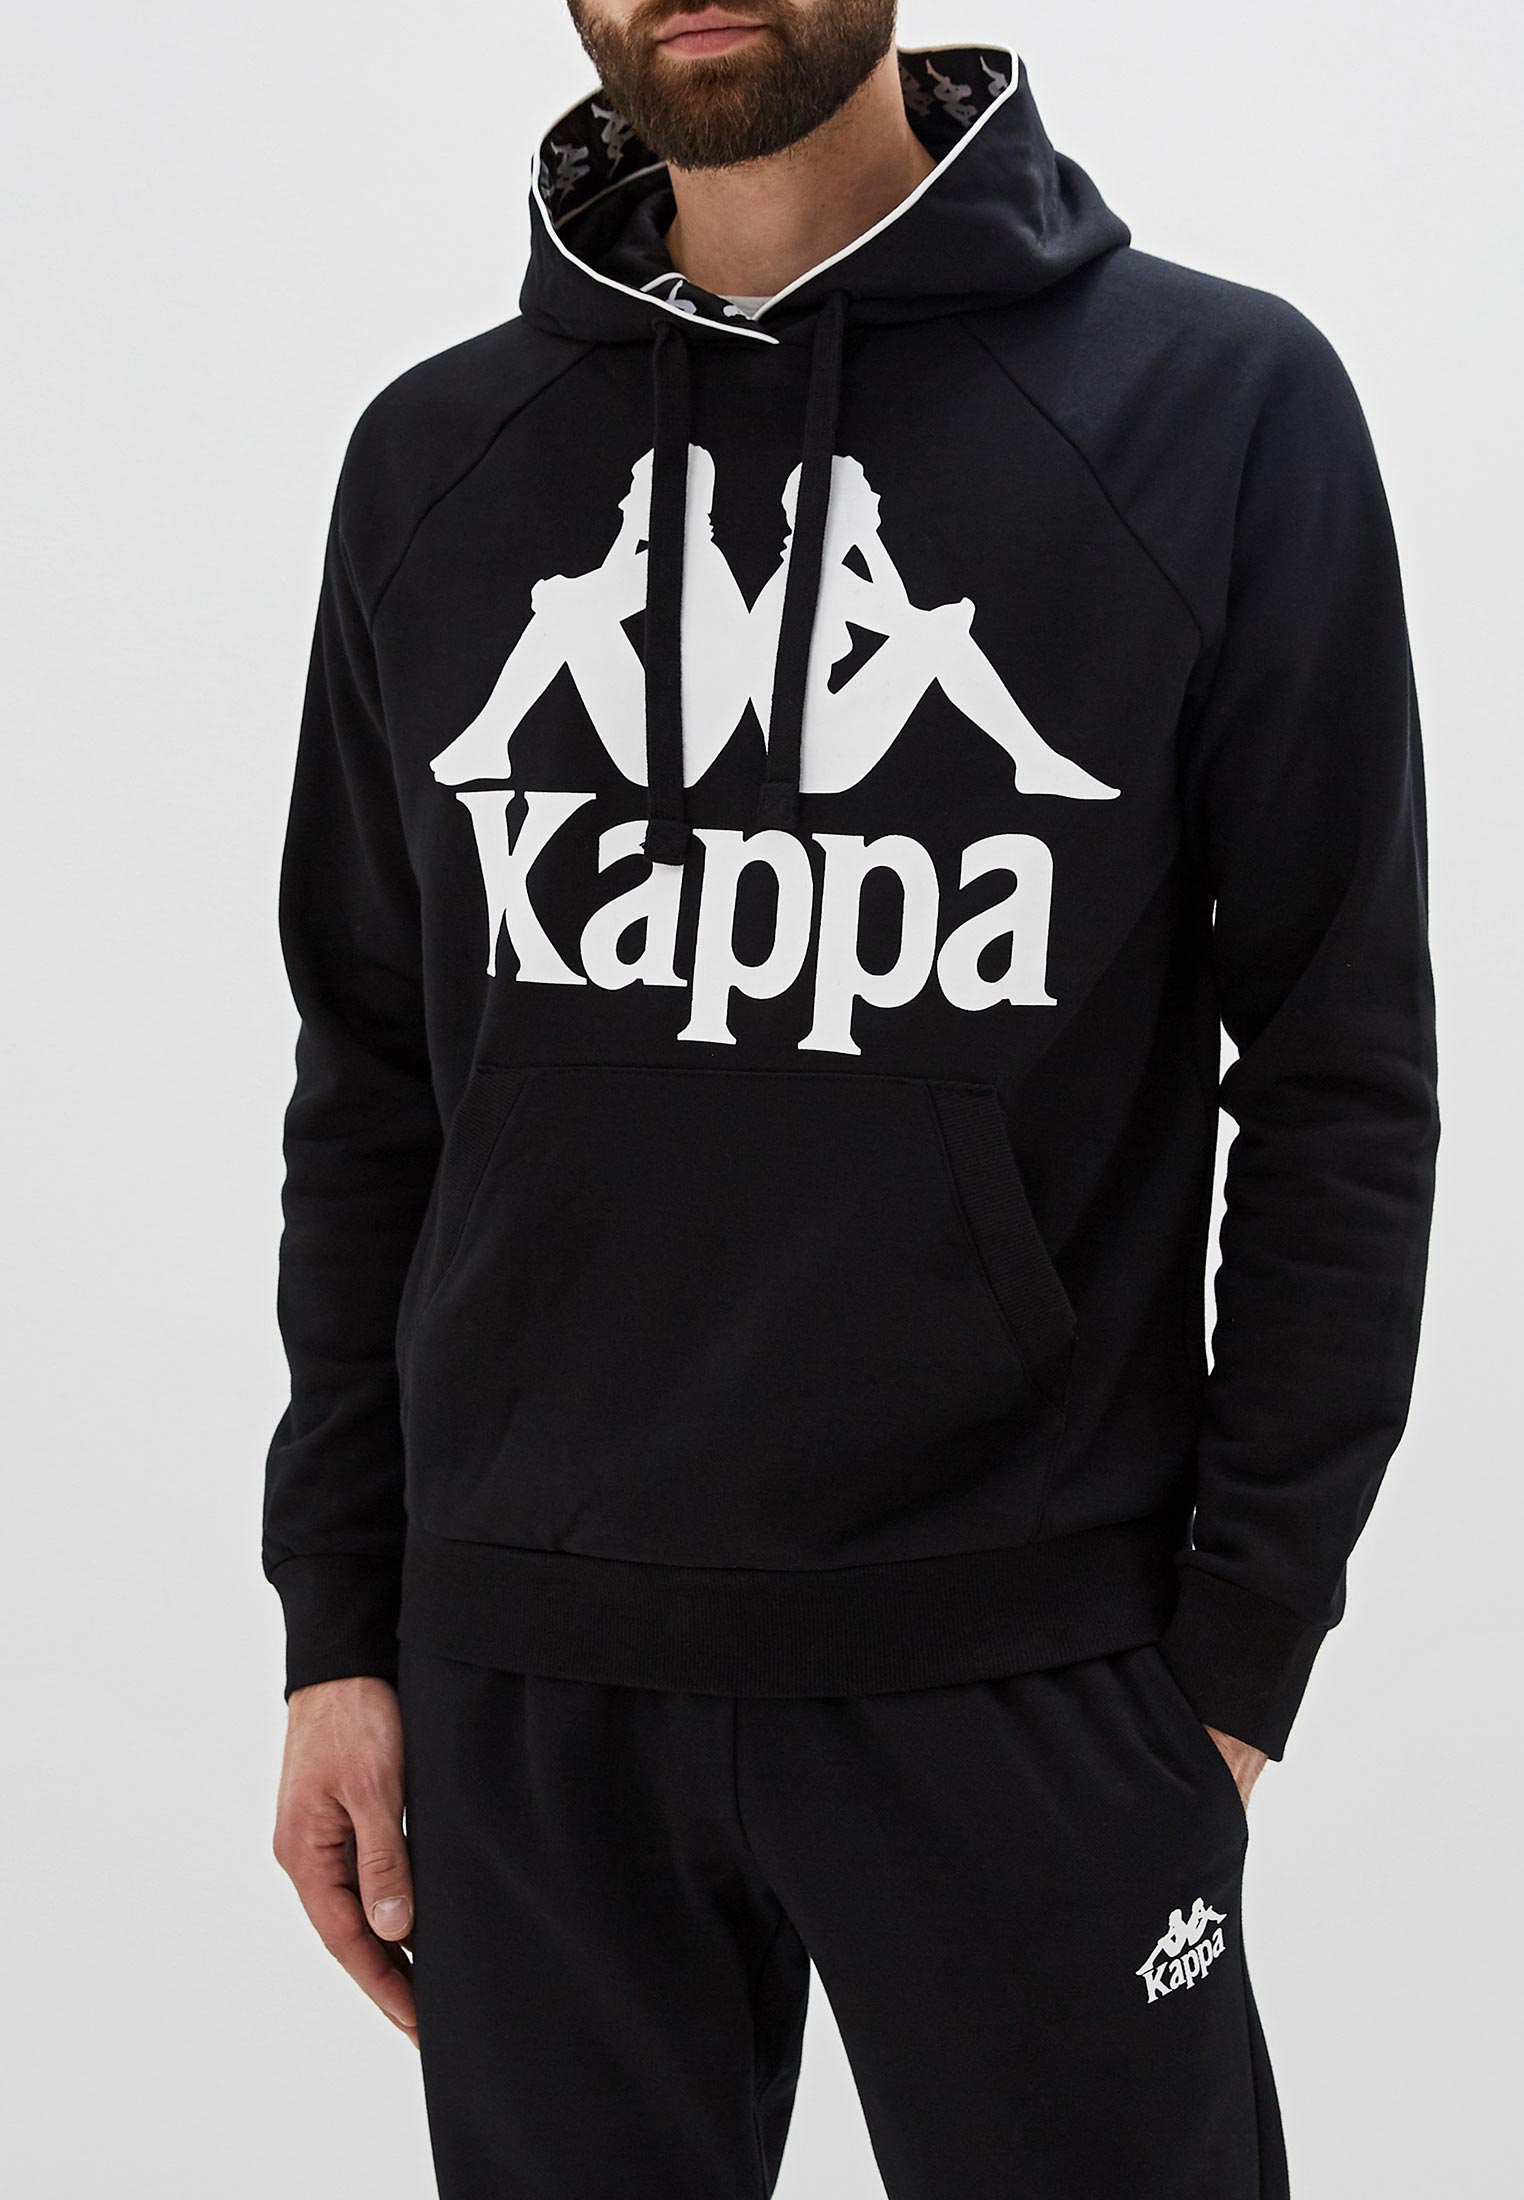 Костюм карра. Худи Kappa мужские. Kappa худи черное. Kappa одежда мужская толстовка. Kappa худи черно белая толстовка мужская.